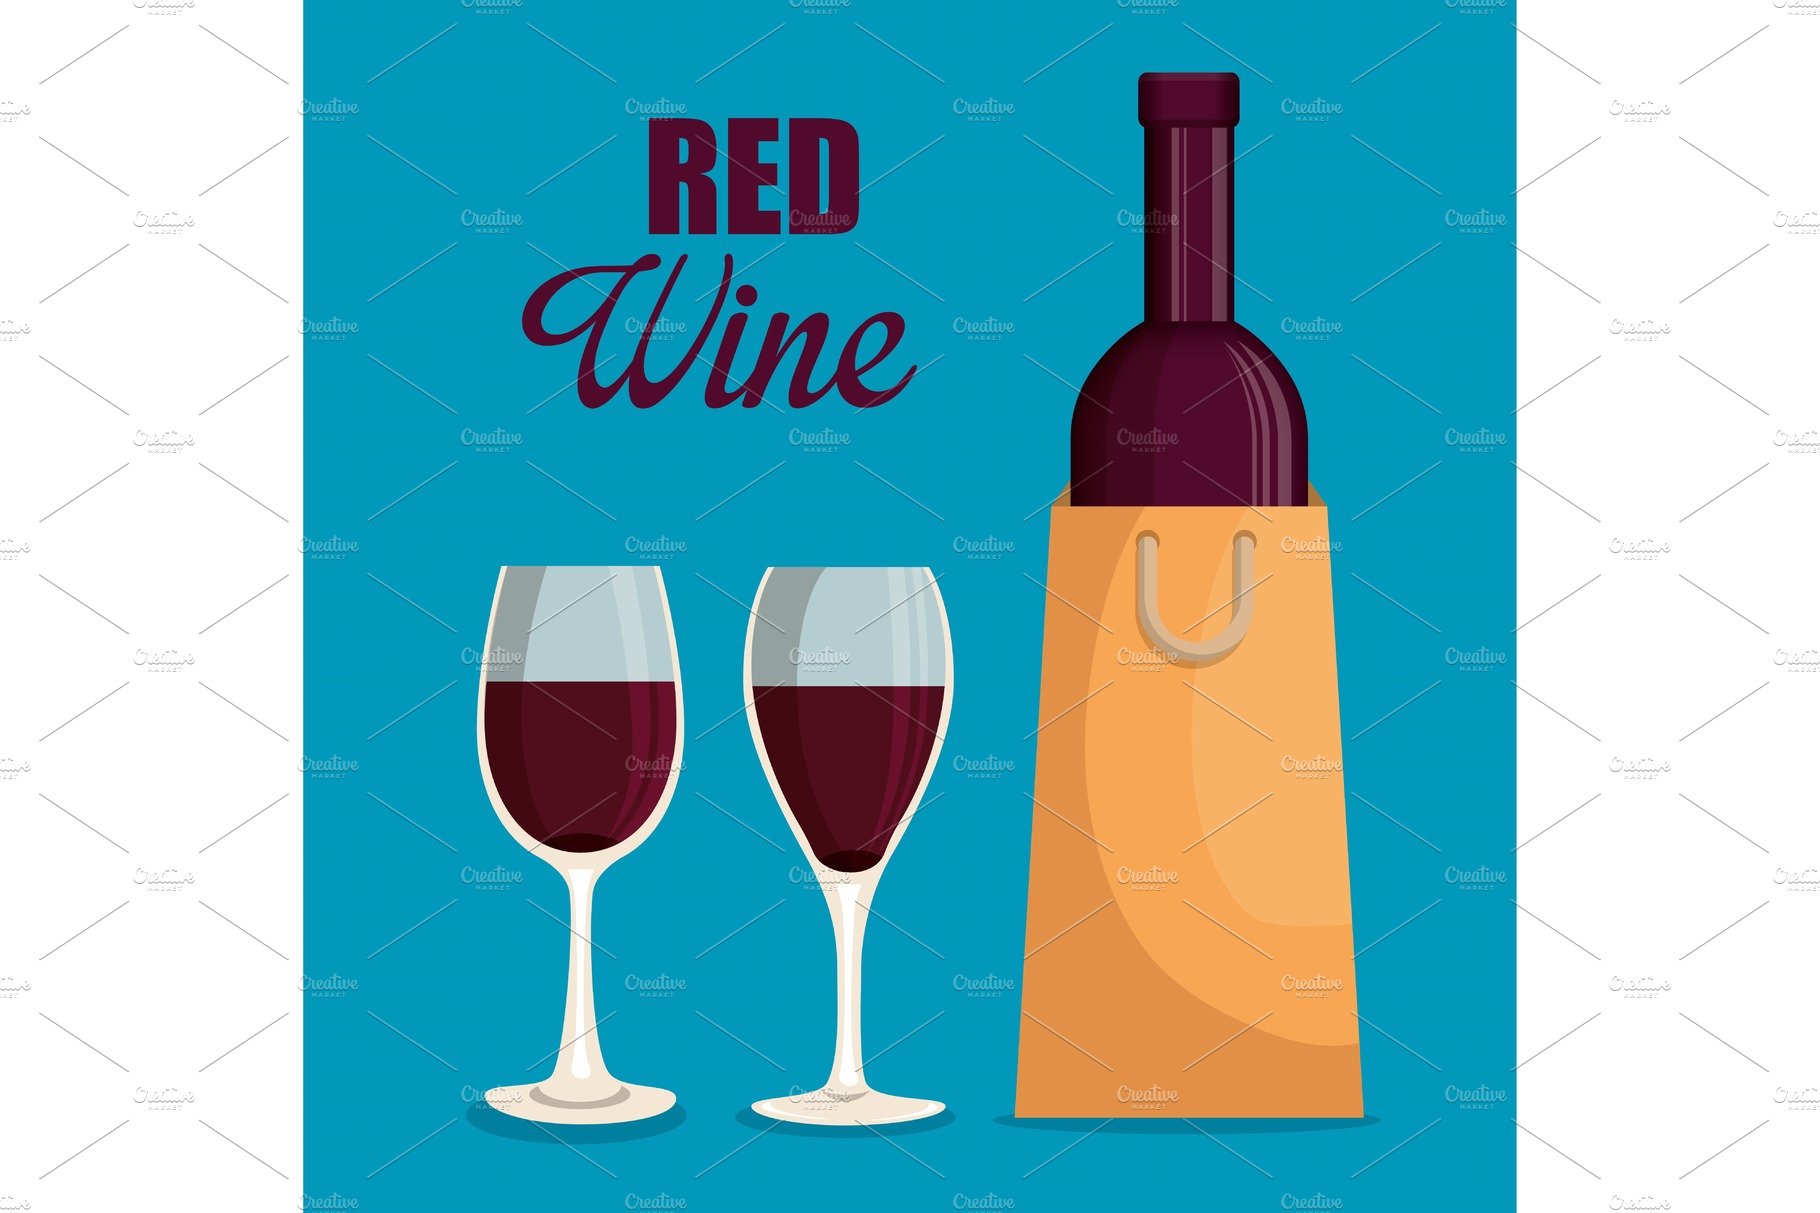 red wine bottles label cover image.